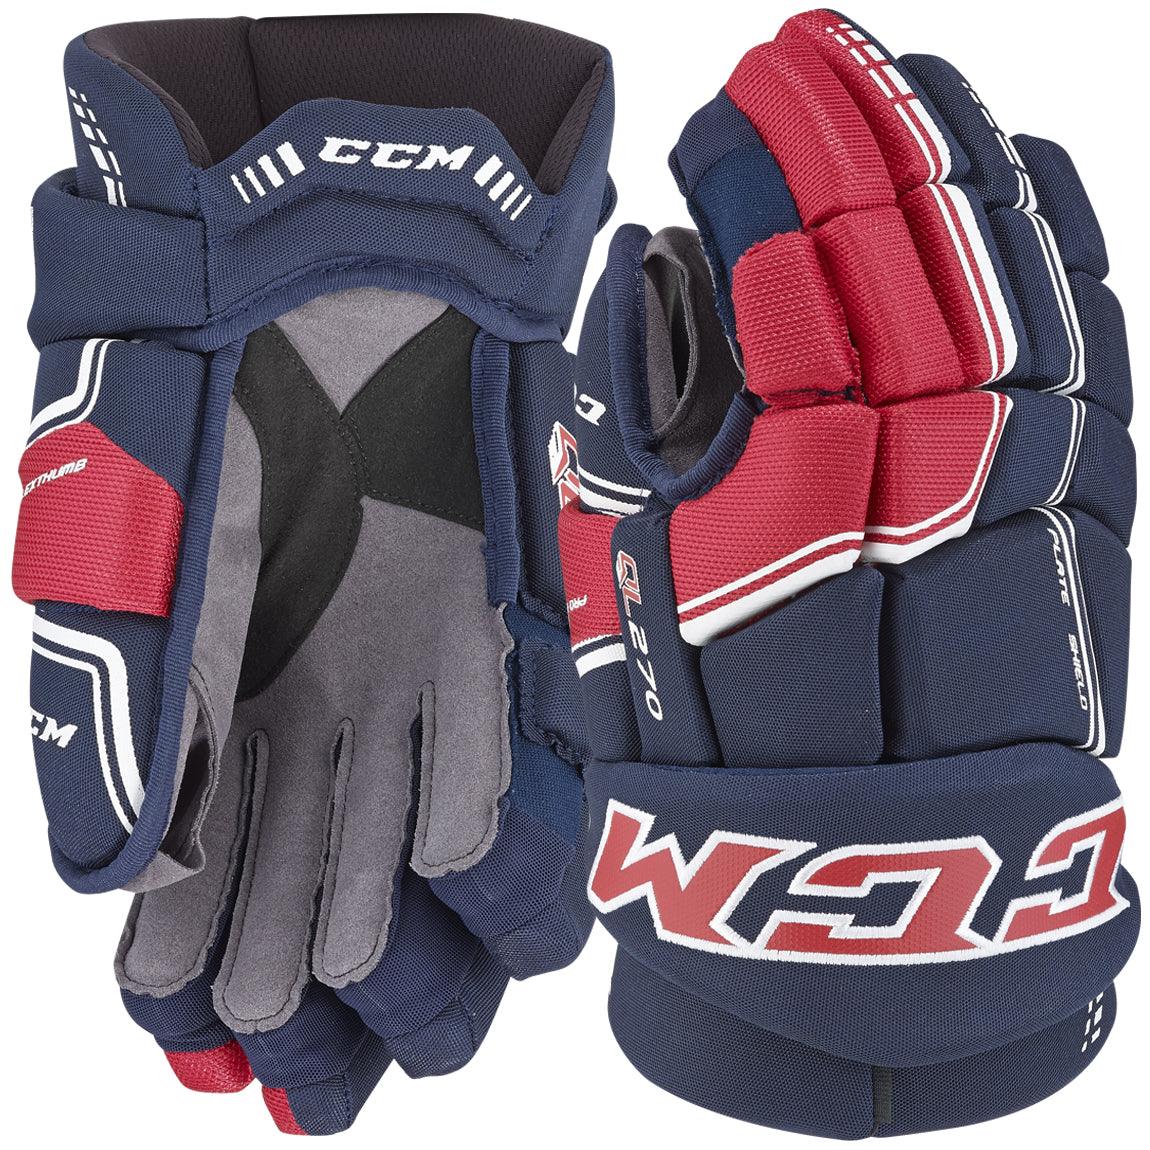 QuickLite 270 Hockey Gloves - Sports Excellence